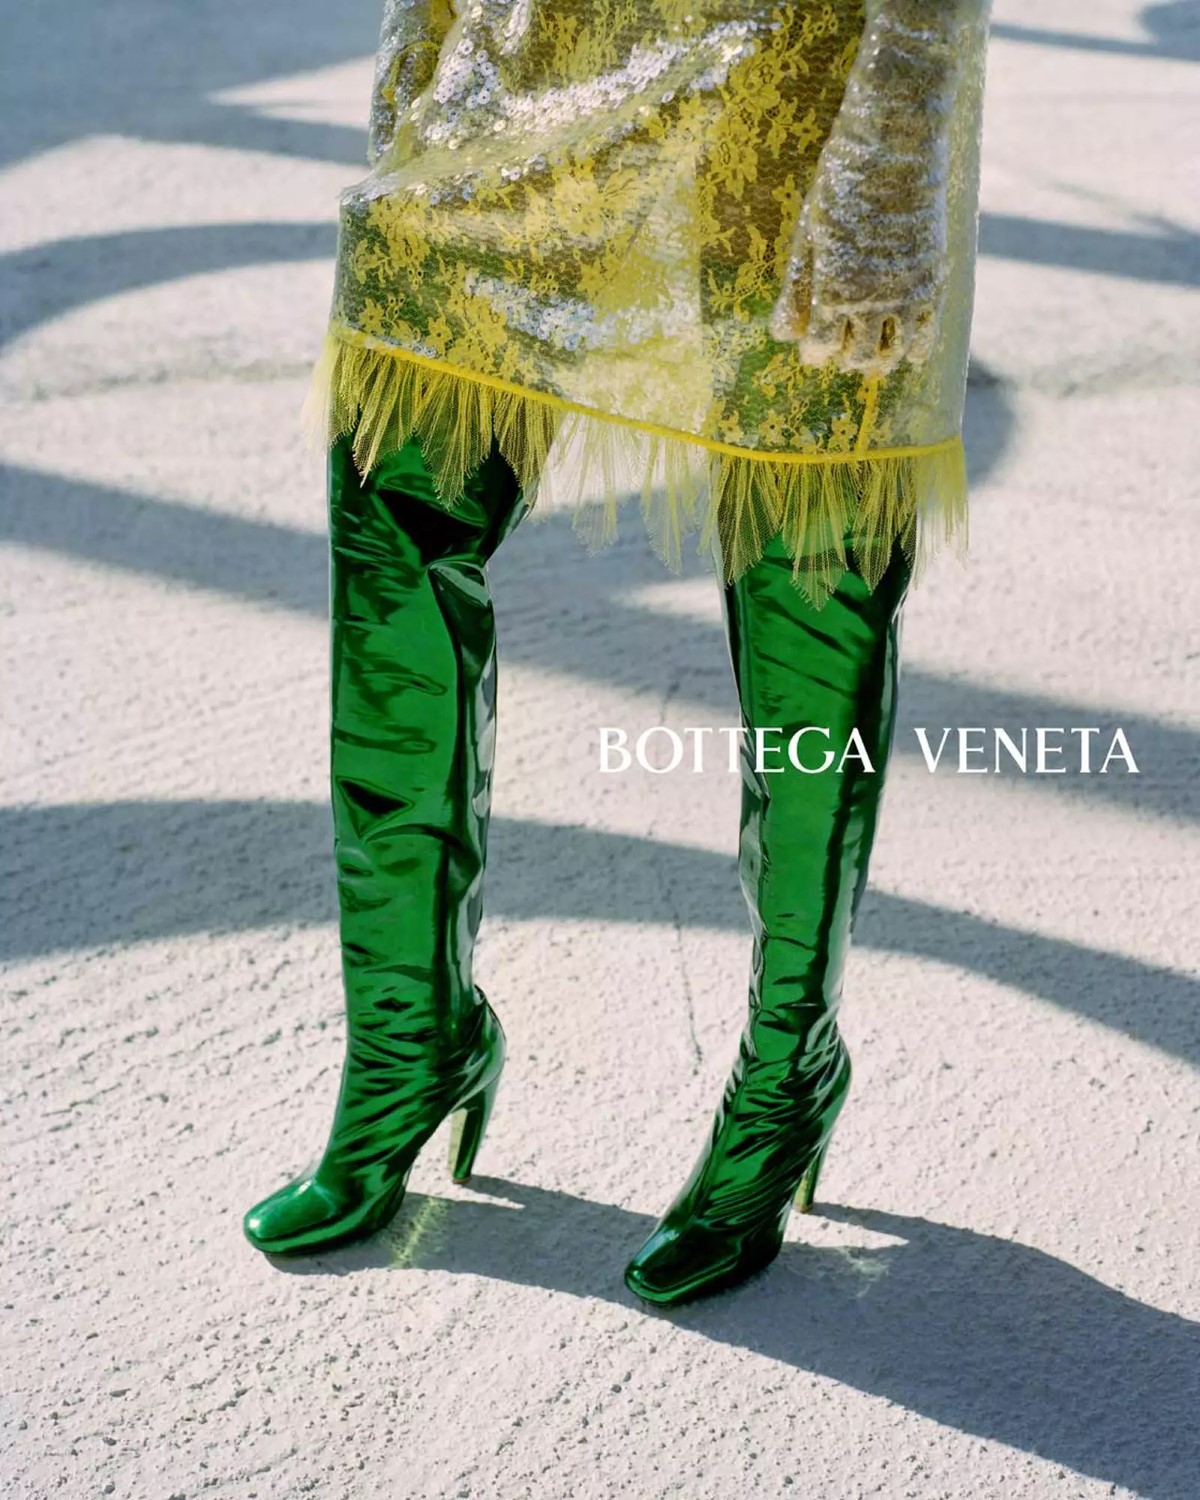 Bottega Veneta Fall Winter 2022 Campaign